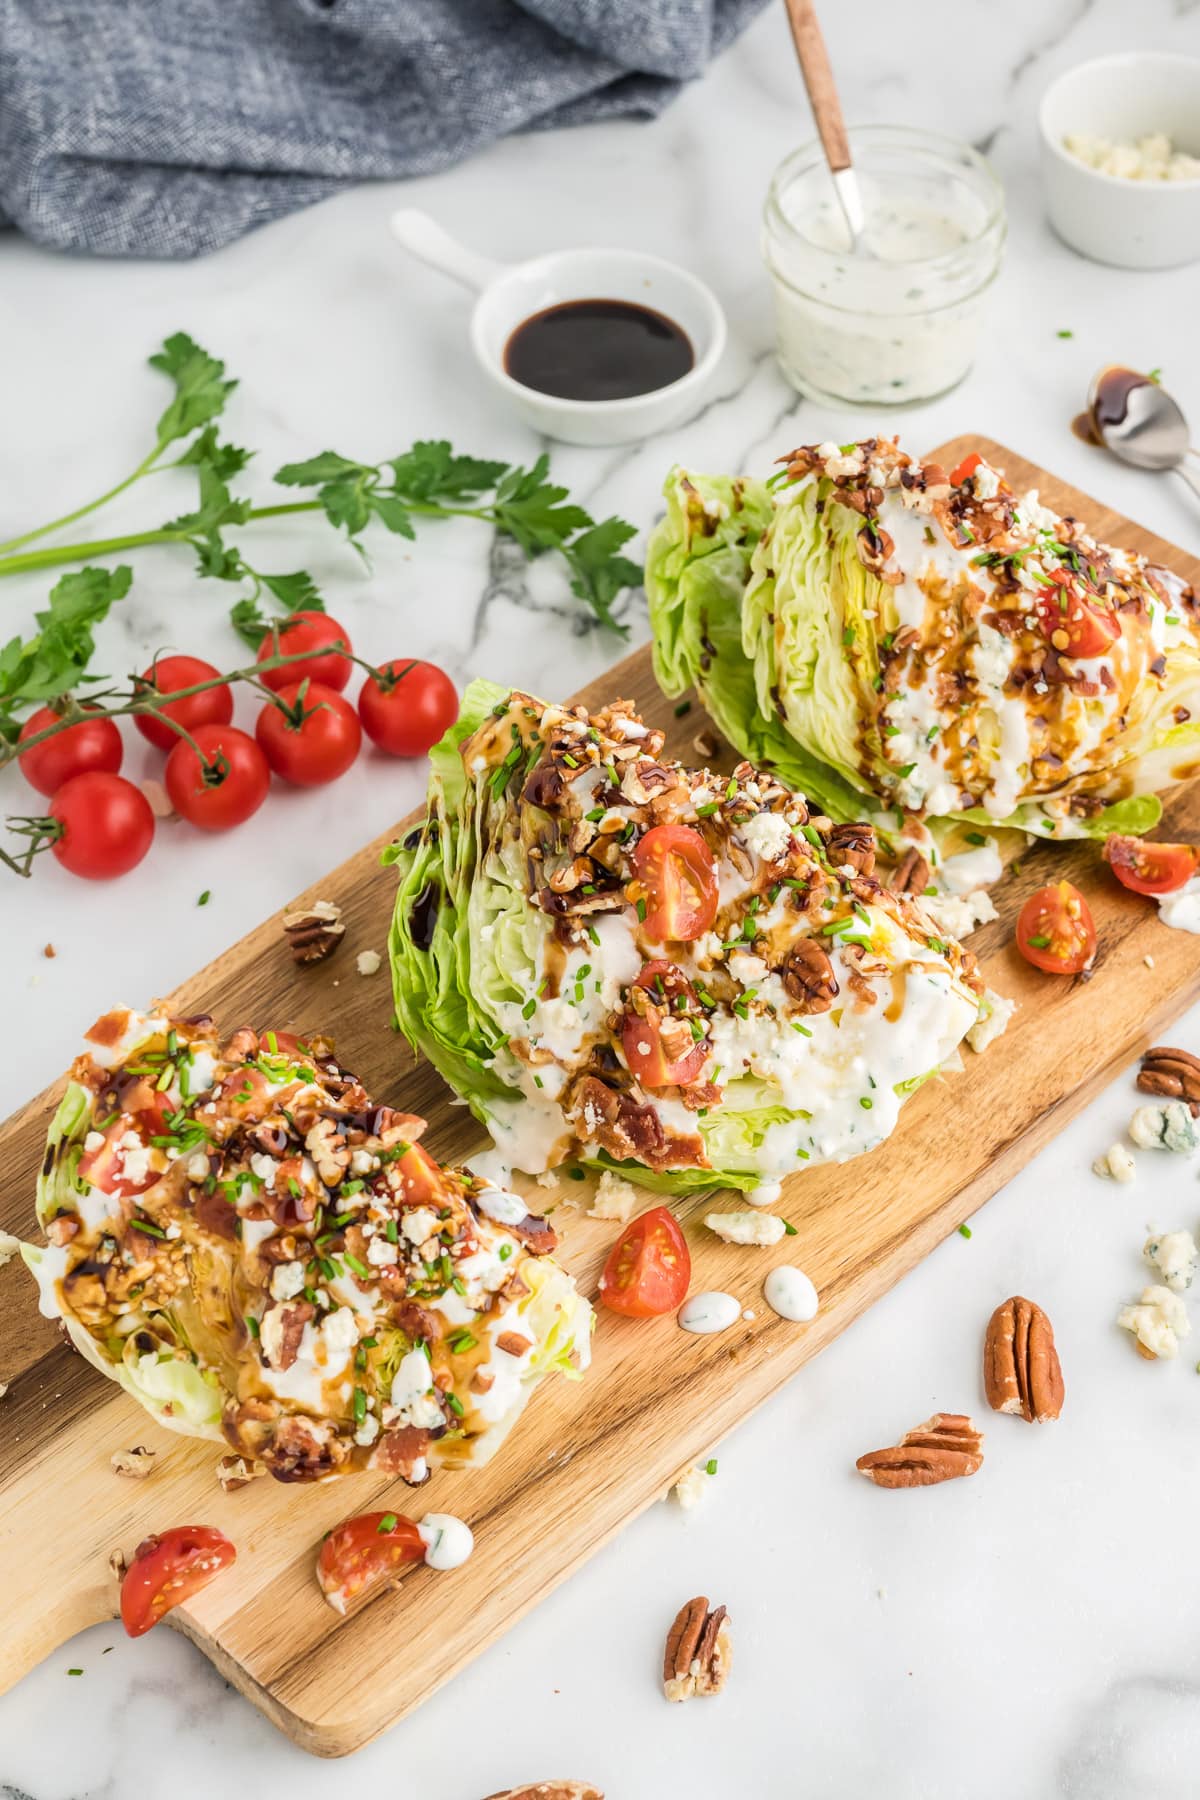 Three wedge salads on a cutting board